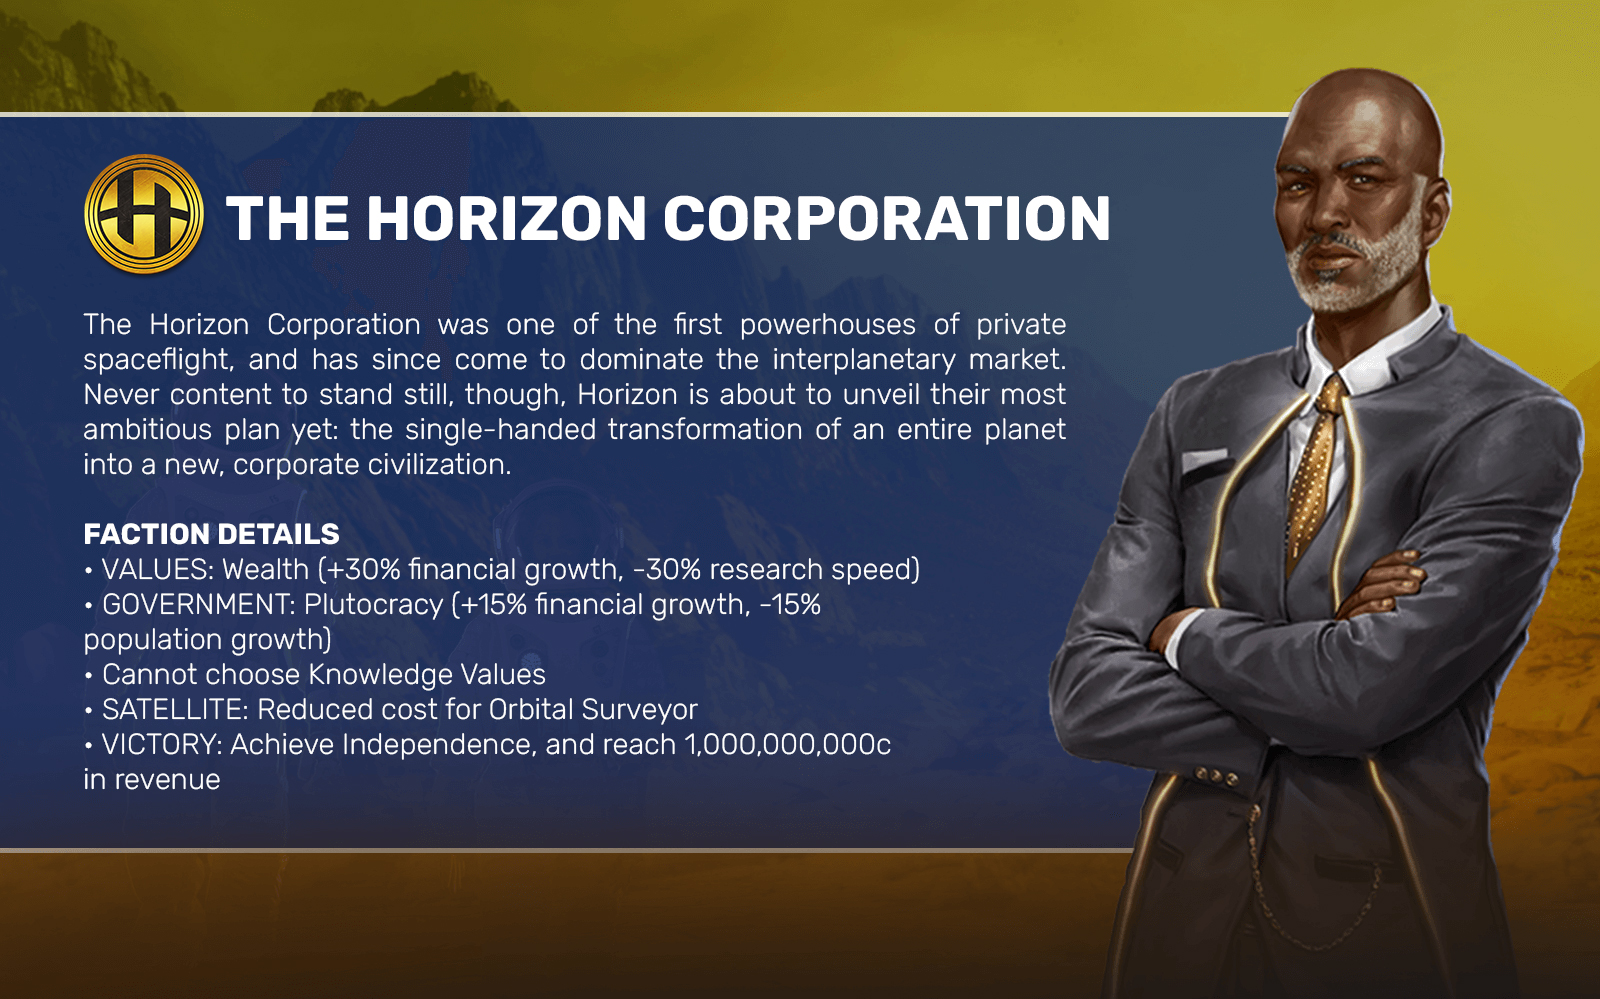 THE HORIZON CORPORATION